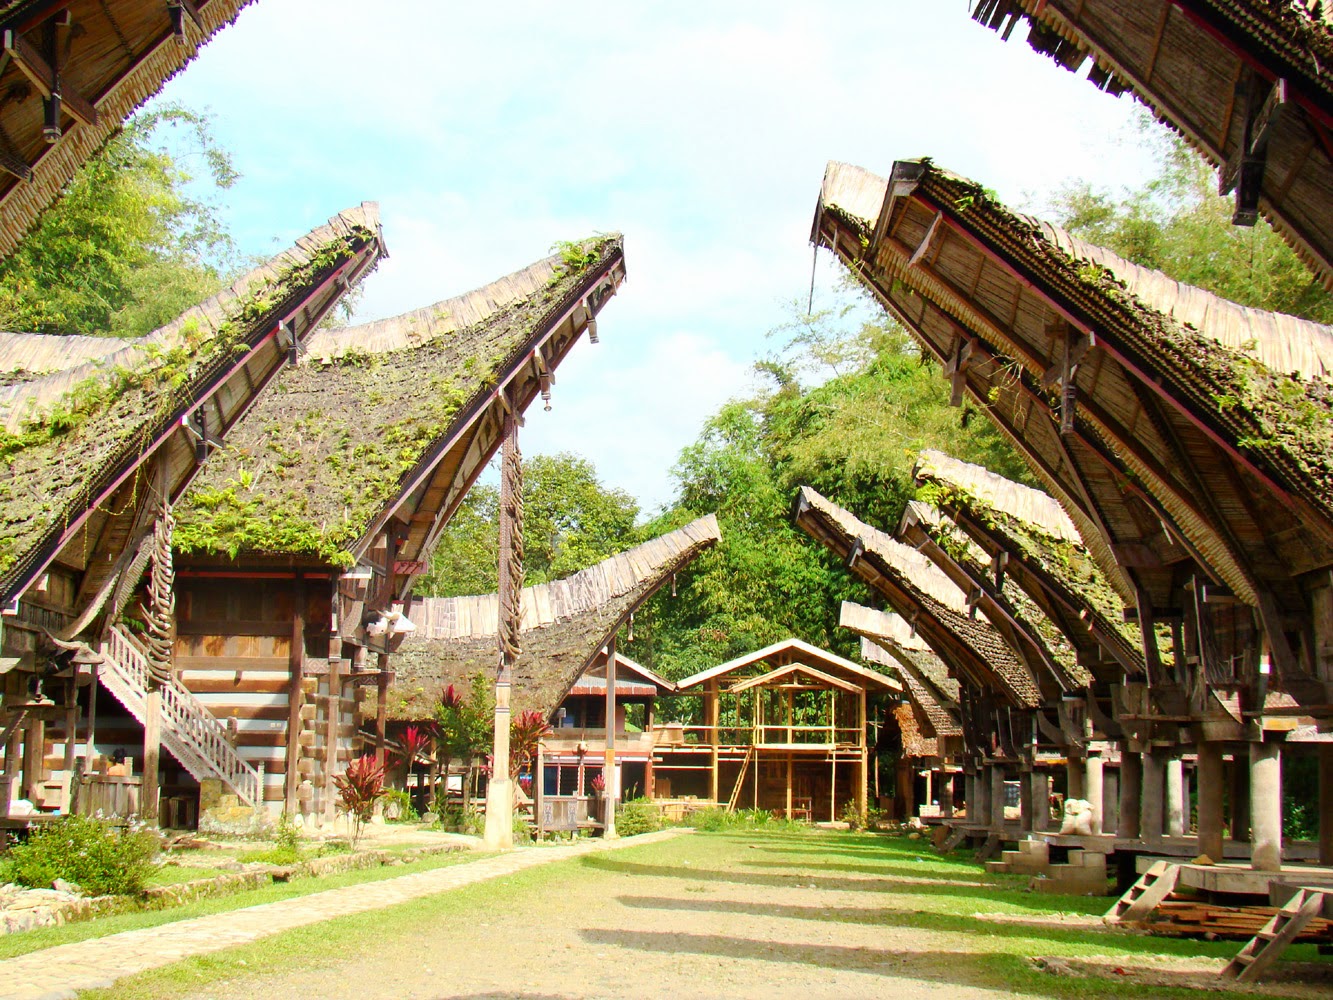  Rumah  Tradisional dalam Arsitektur Kuno Austronesia 